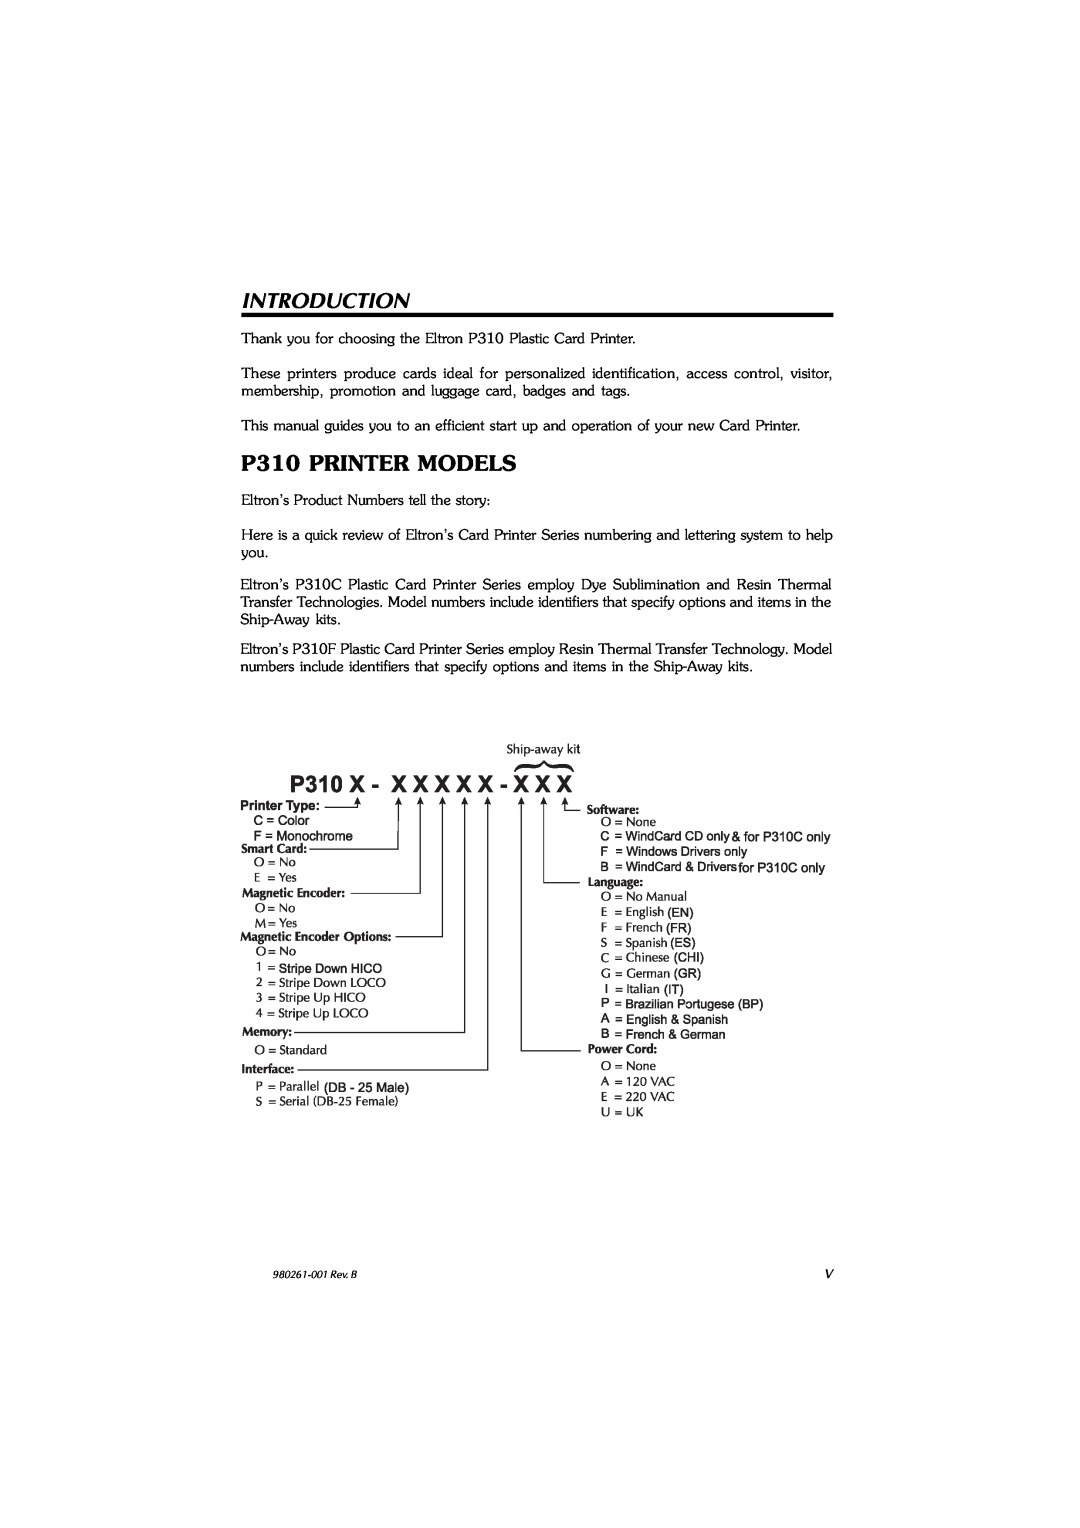 Zebra Technologies P310C, P310F user manual Introduction, P310 PRINTER MODELS 